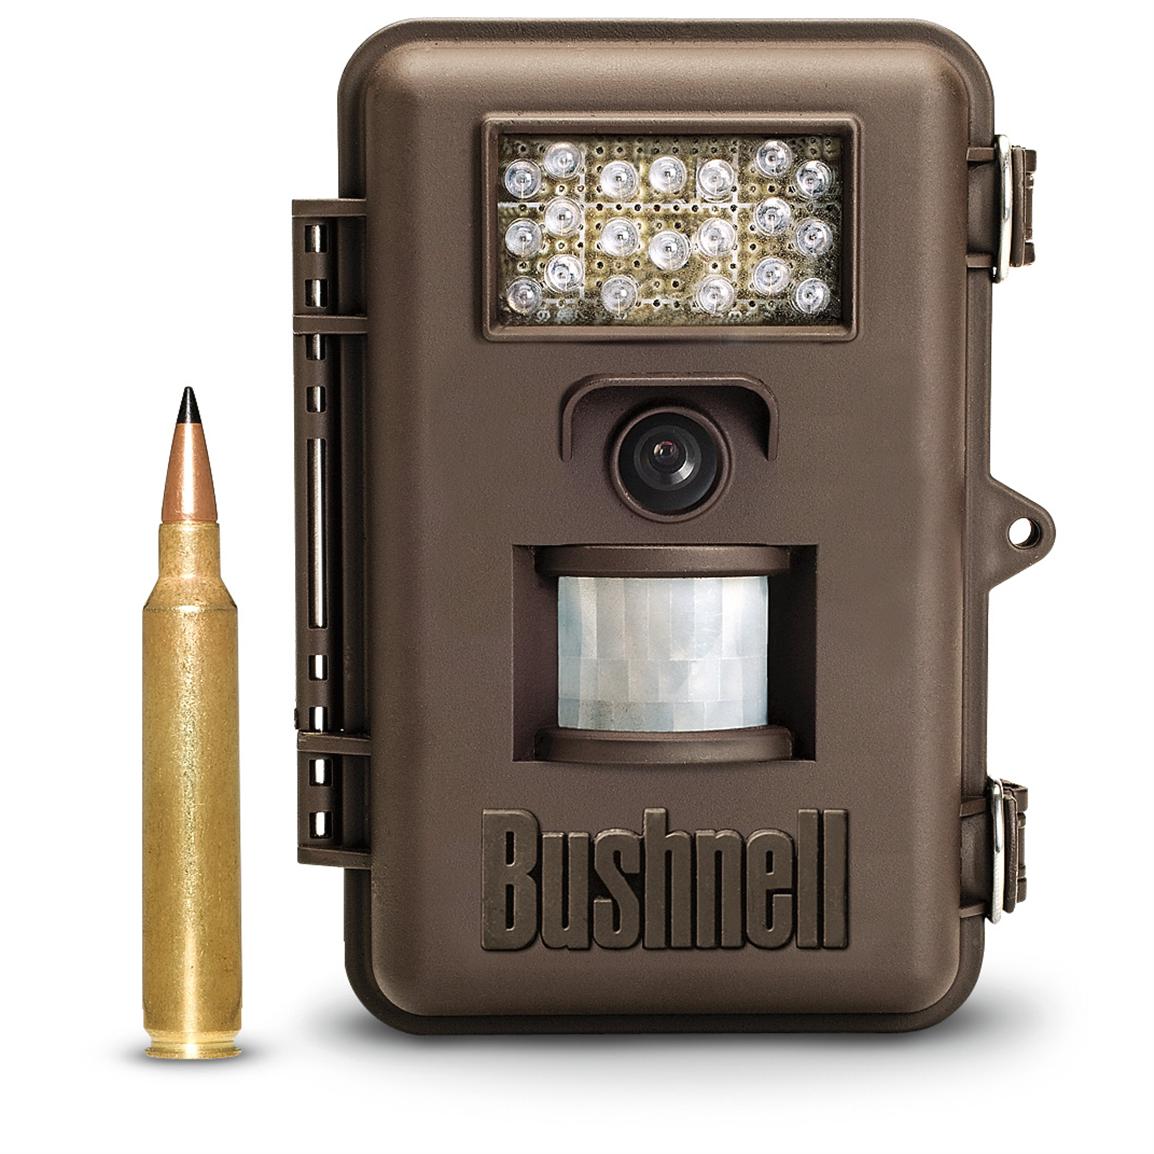 bushnell-trophy-cam-160752-game-trail-cameras-at-sportsman-s-guide